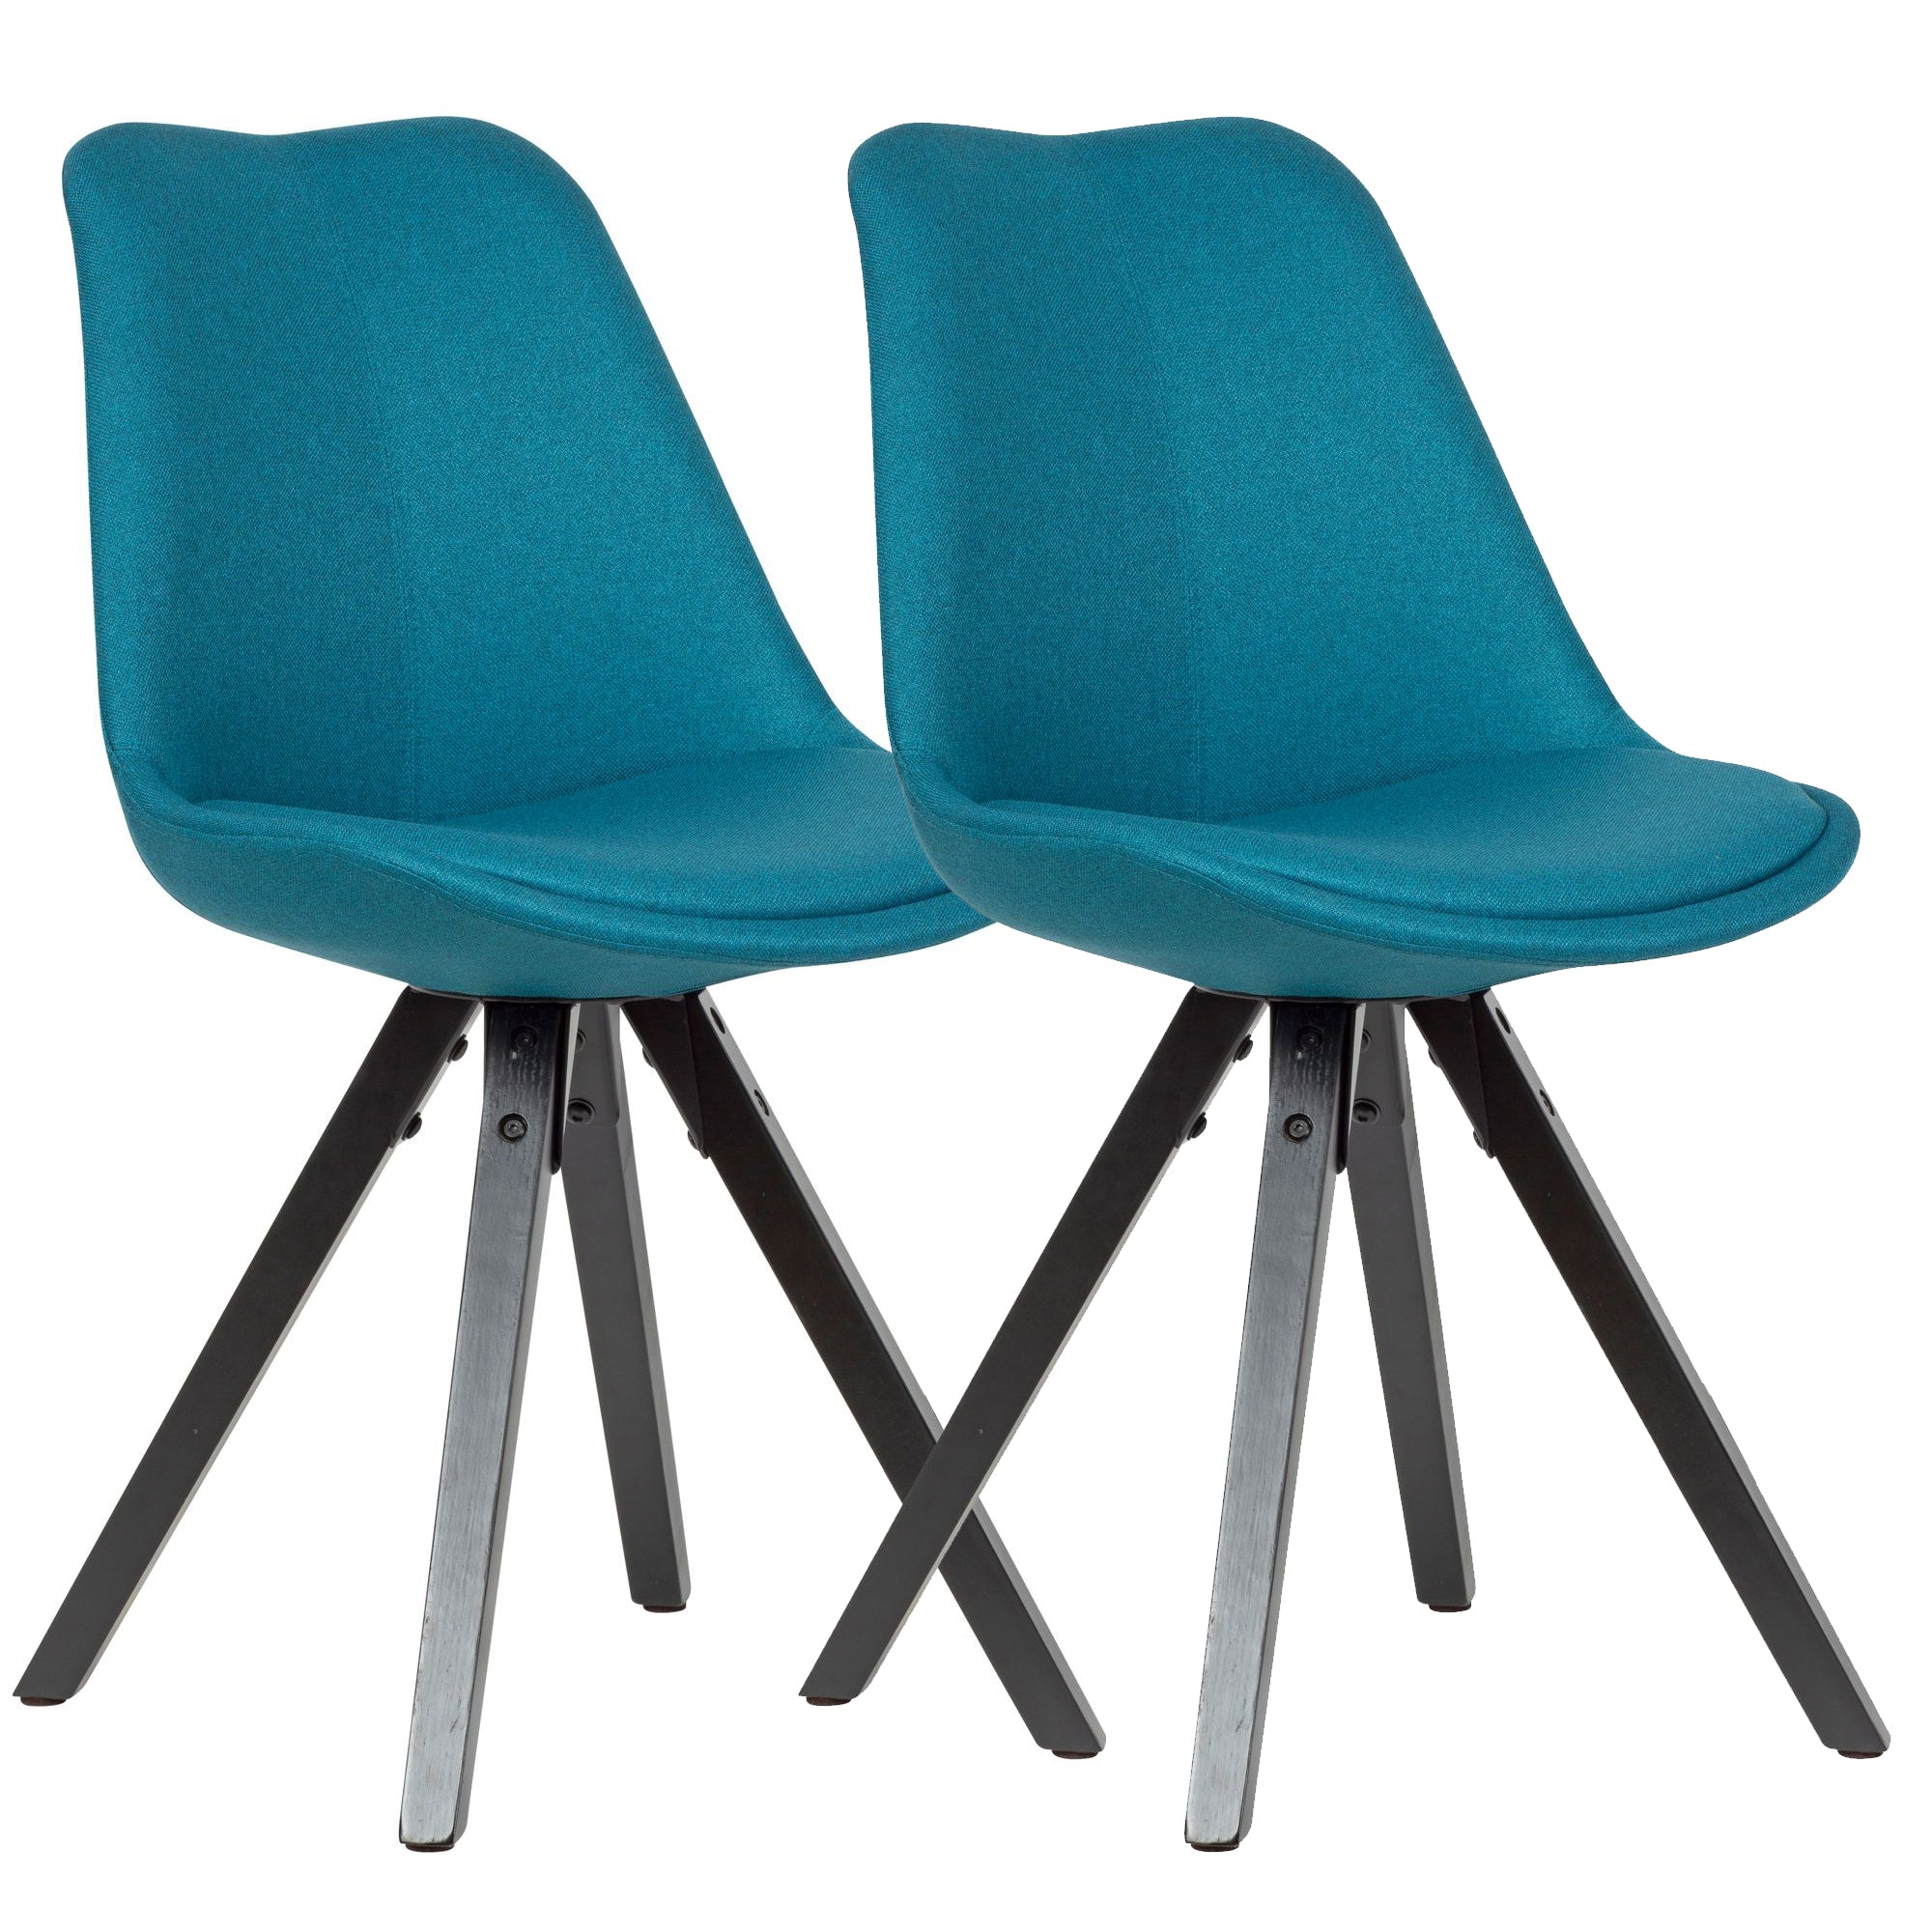 7: Sæt med 2 x spisebordsstole, polstret, skandinavisk stil, petrol blå